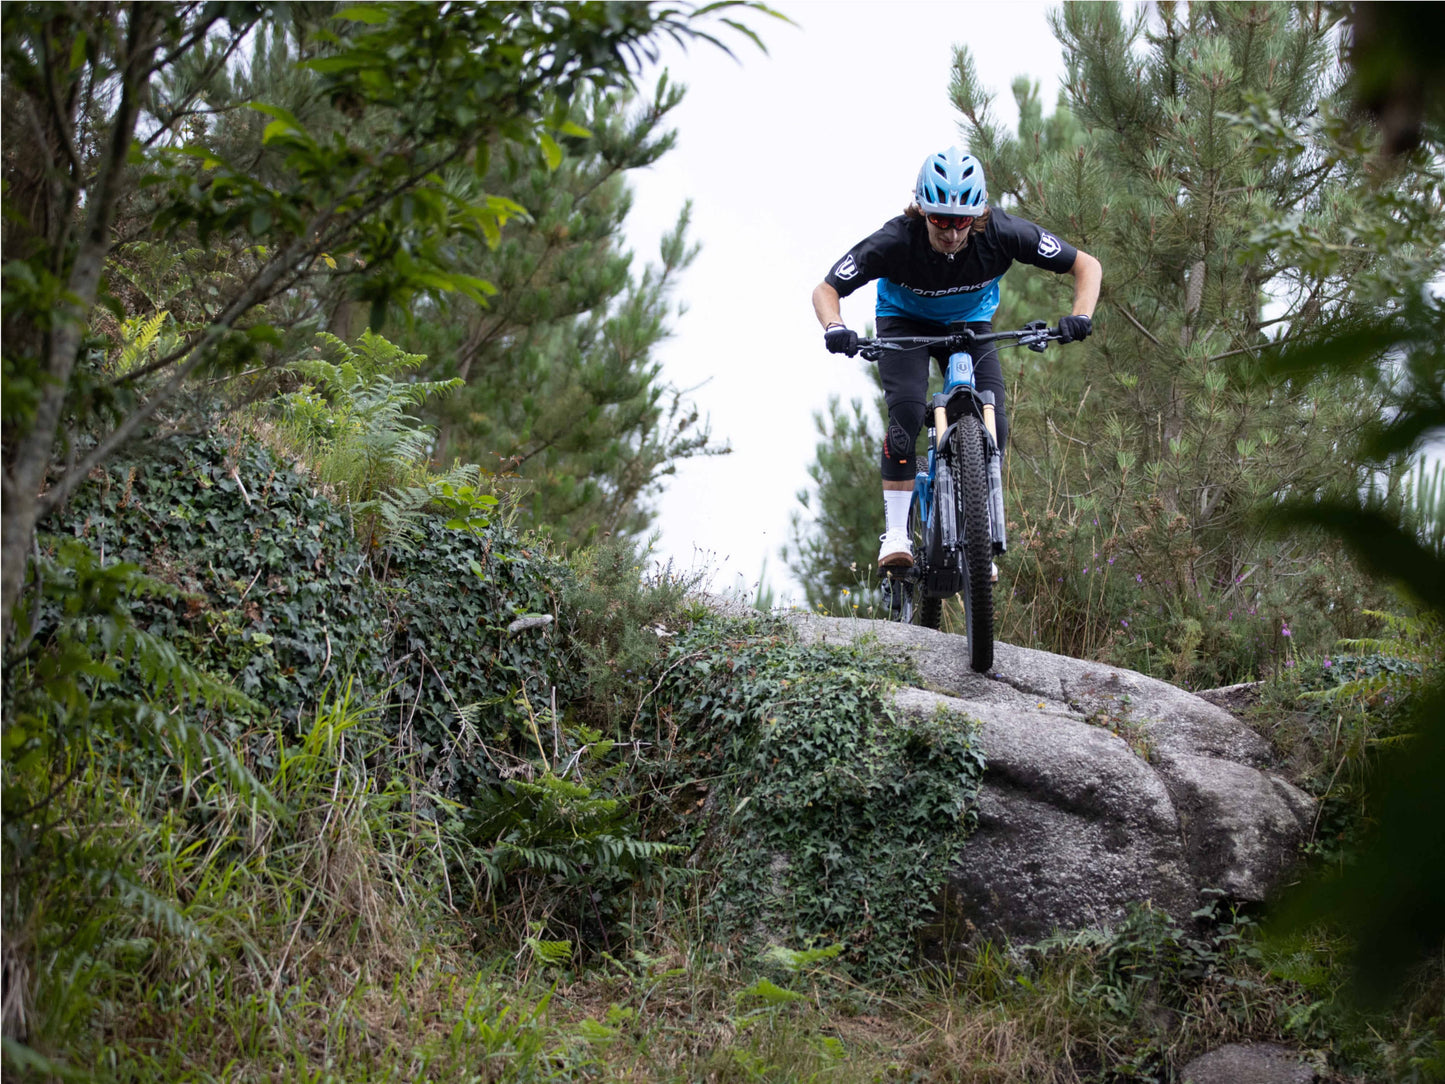 Mondraker Dusk e-mountain bike riding on rocks on Fly Rides